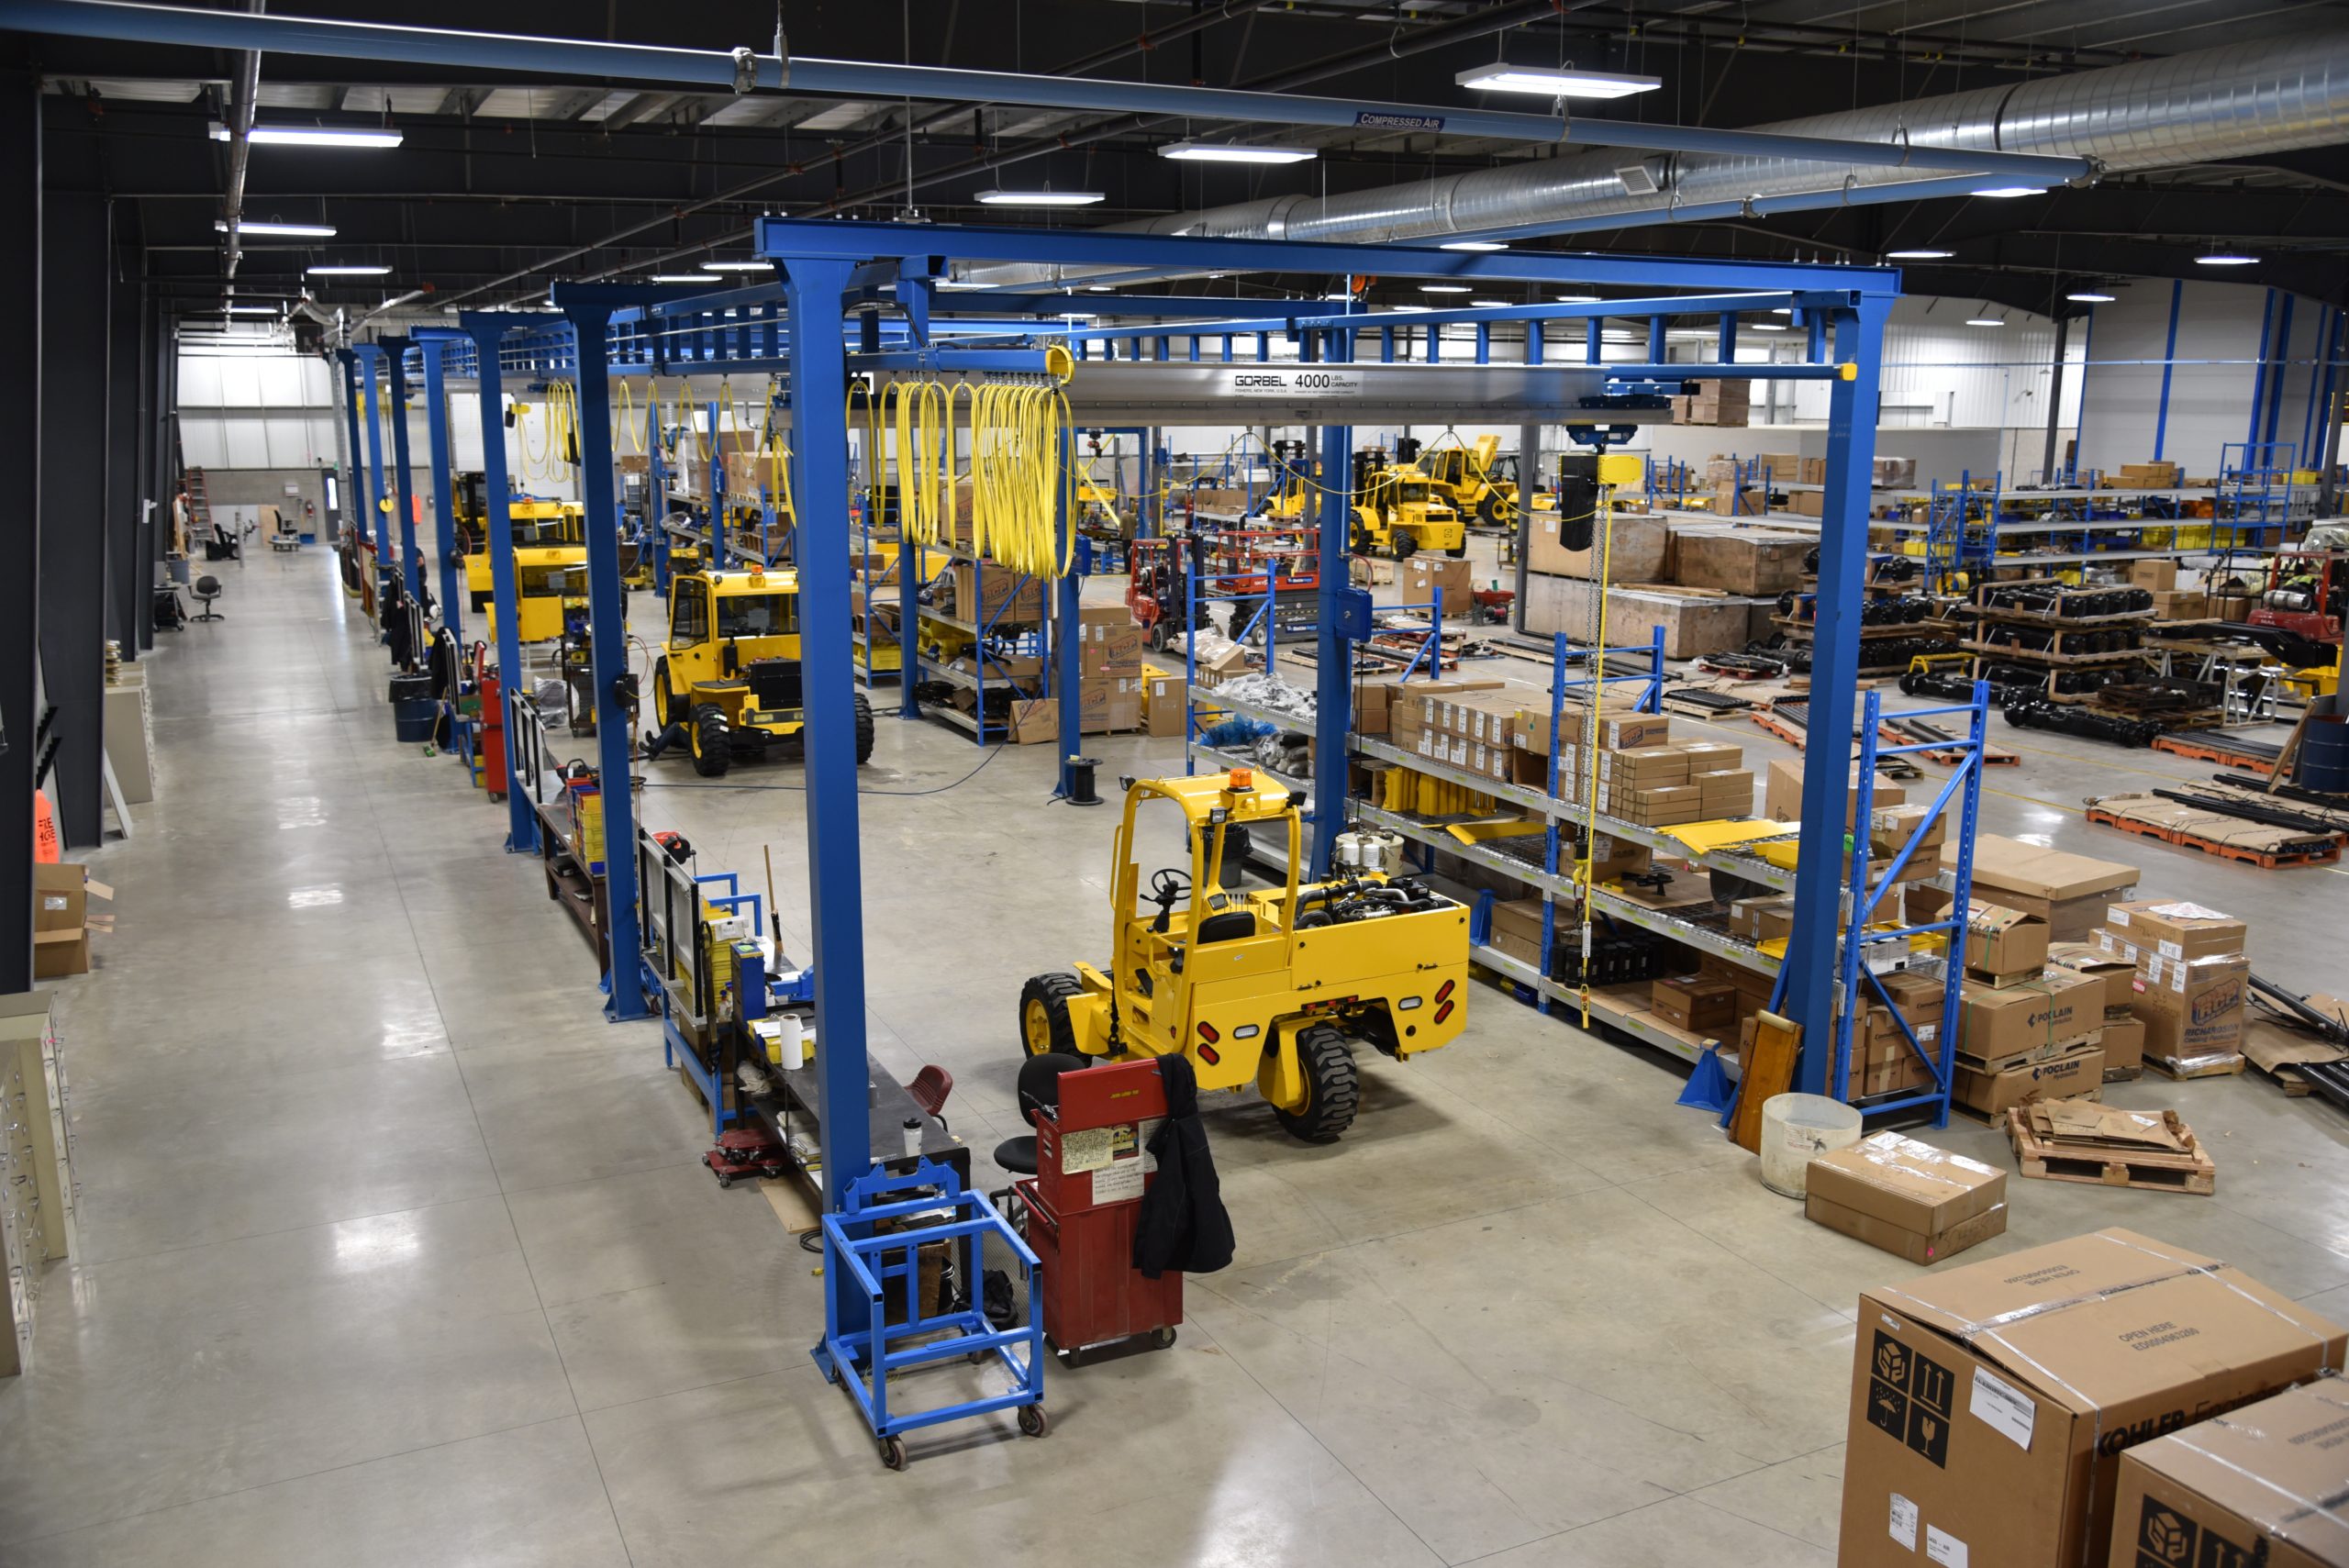 Gorbel Enclosed Track Workstation boost warehouse efficiency